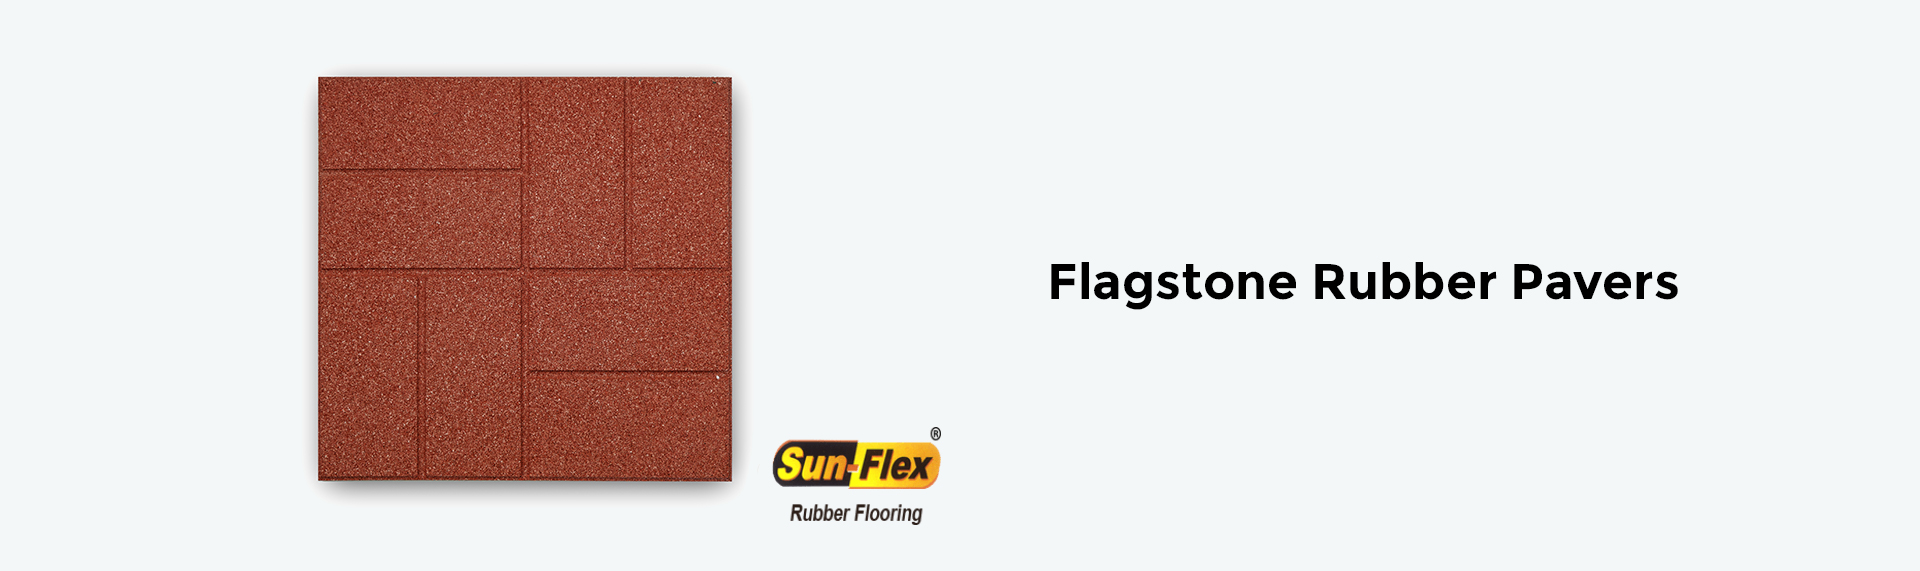 1-Flagstone-Rubber-Pavers